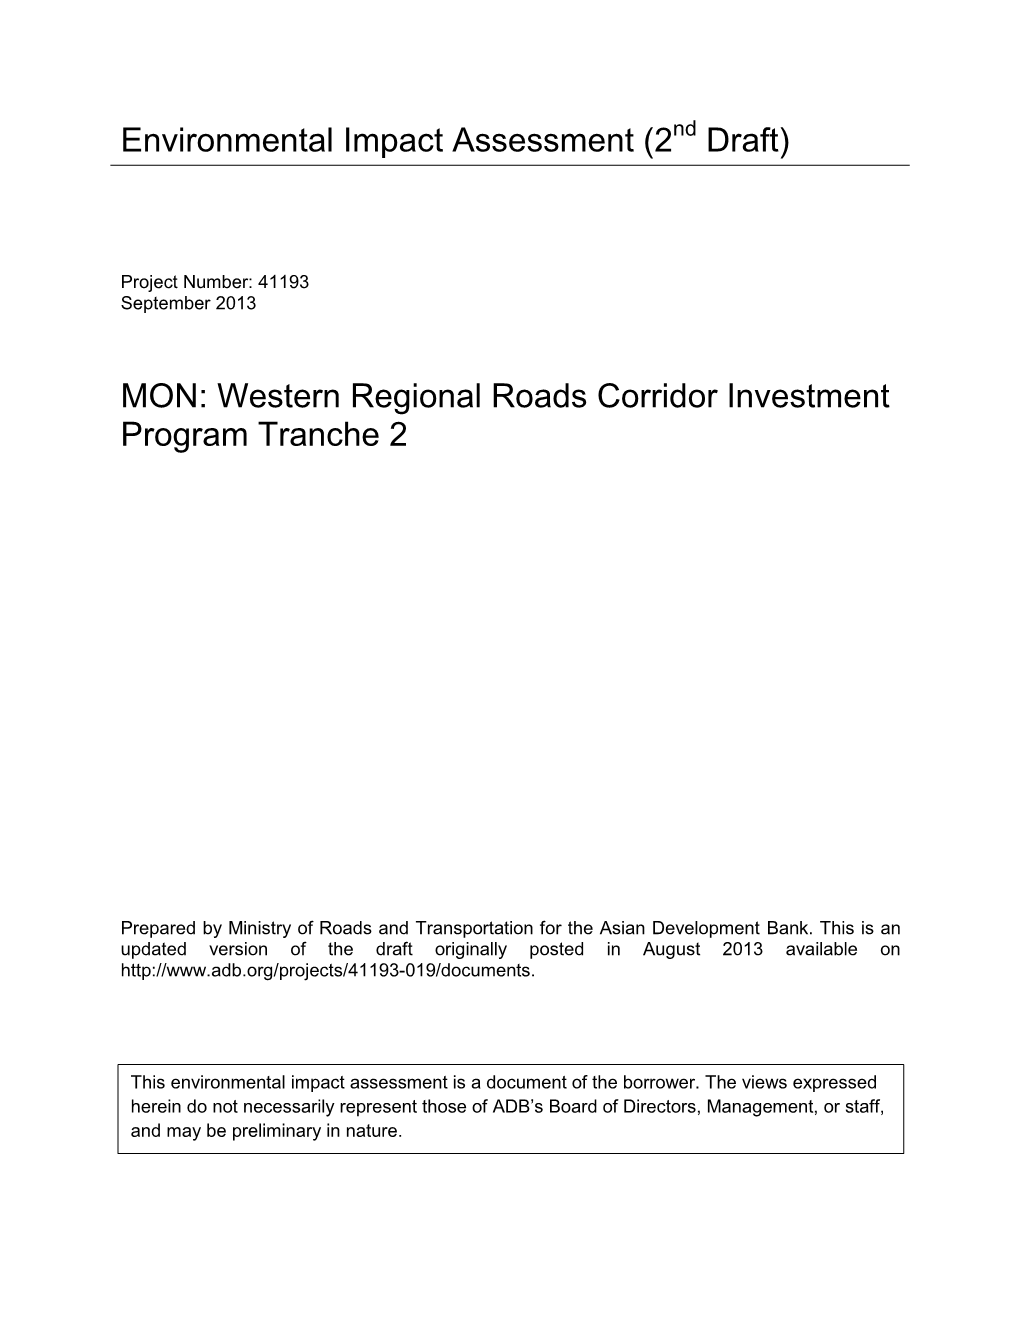 Western Regional Road Corridor Investment Program – Road Sections